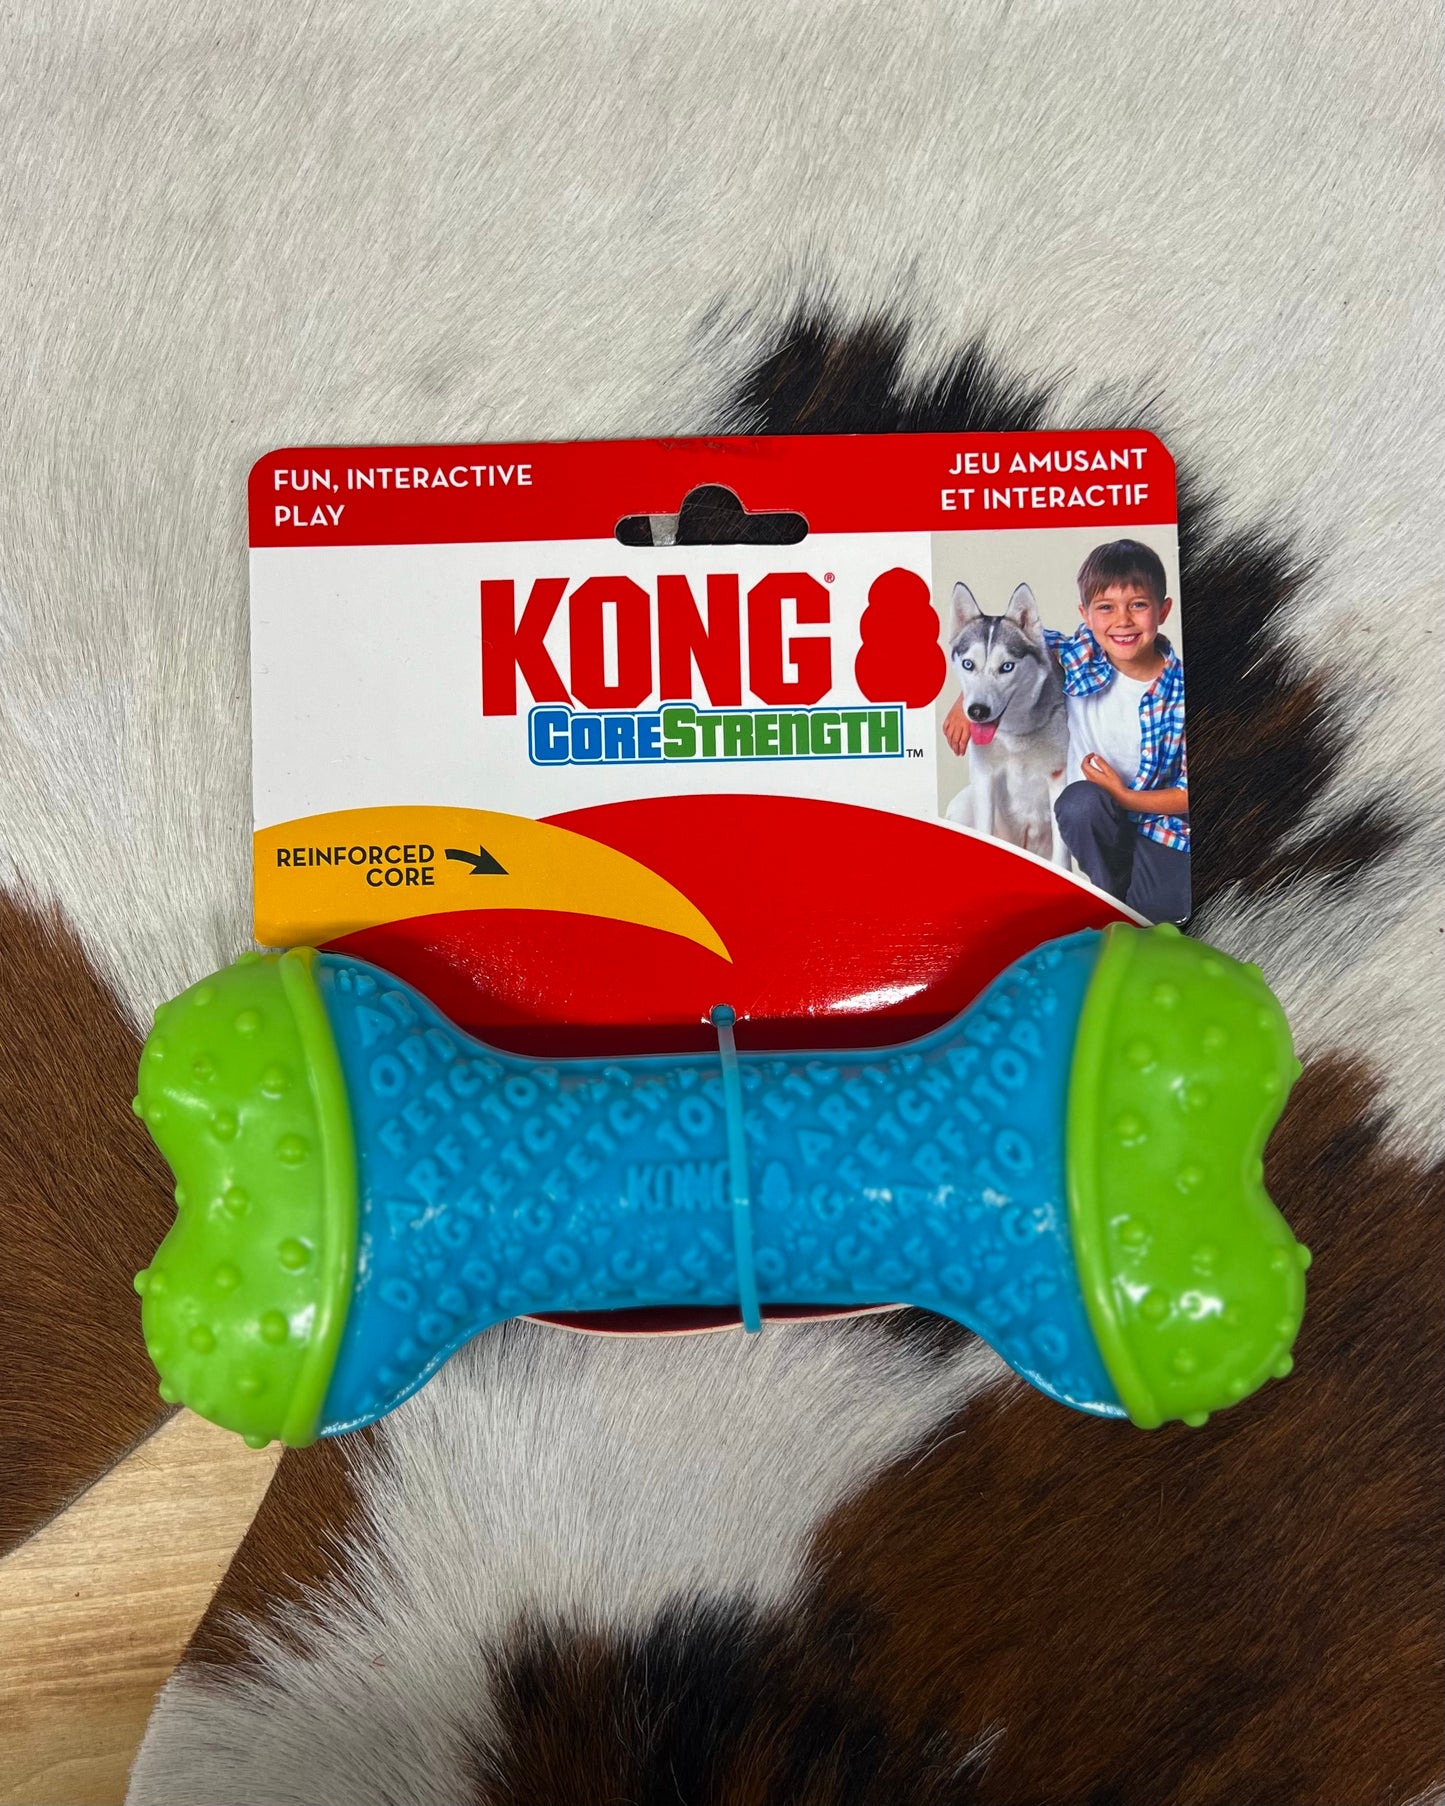 KONG Core Strength Bone Dog Toy